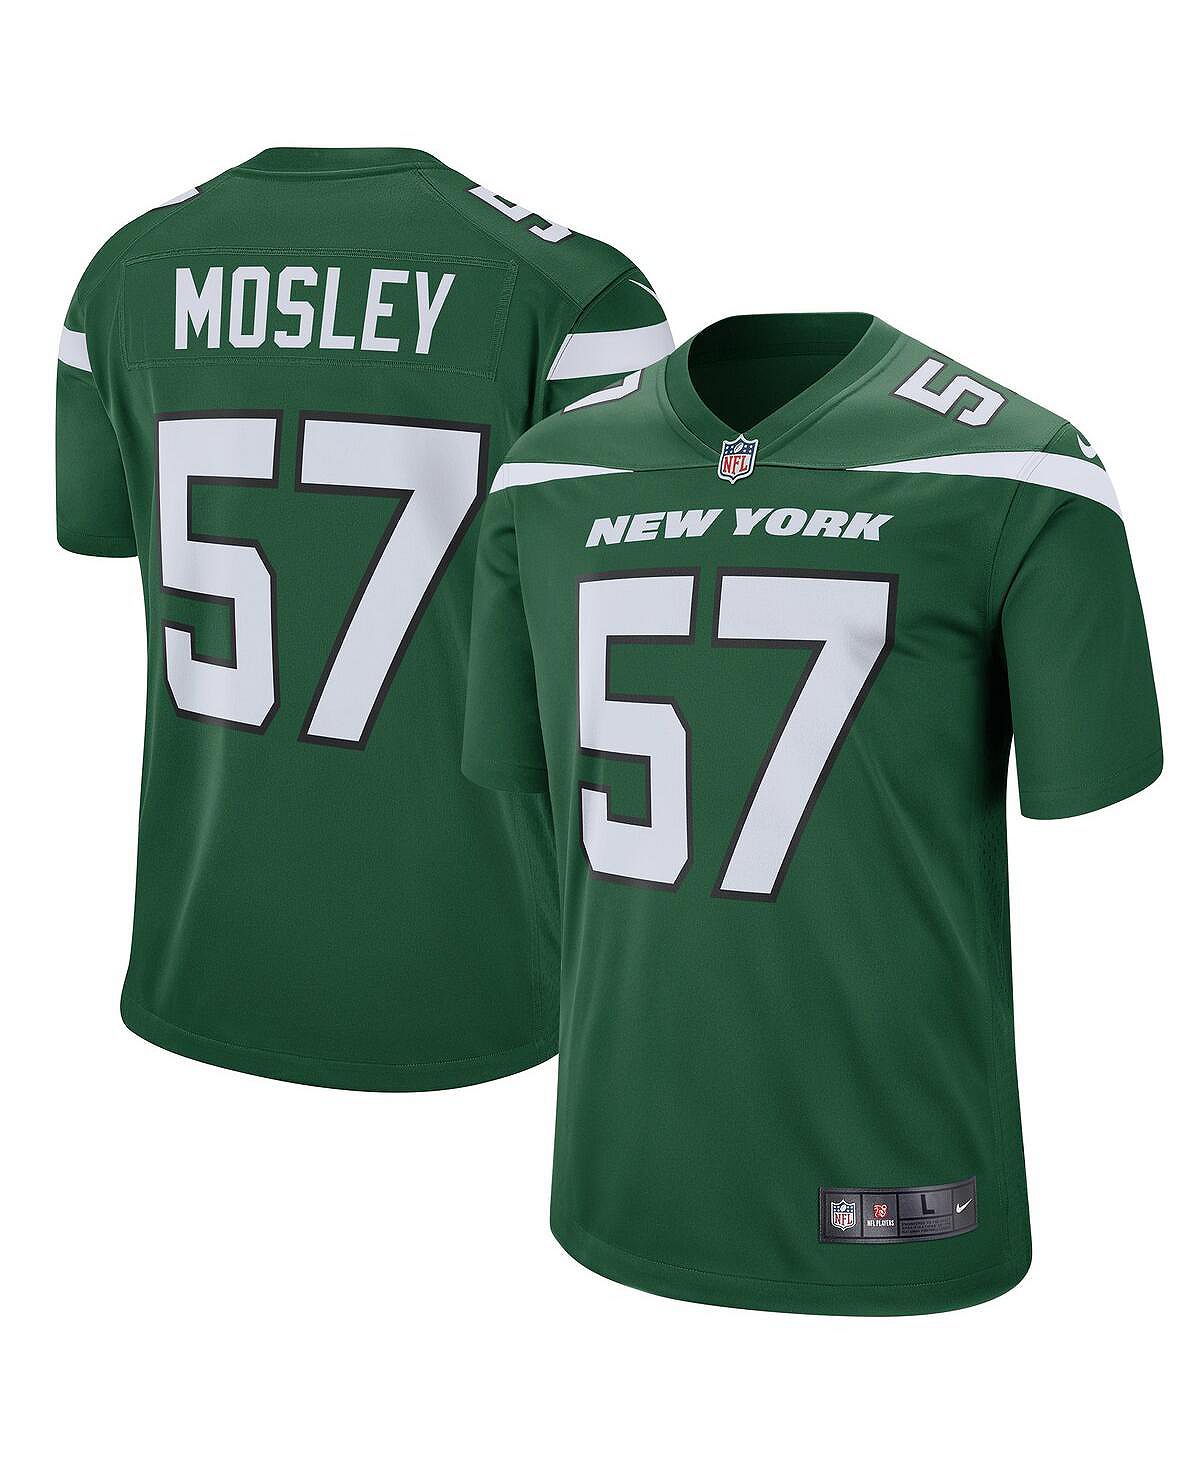 Мужская футболка cj mosley gotham green new york jets game jersey Nike, зеленый конфеты сладкий орешек moda new york кг